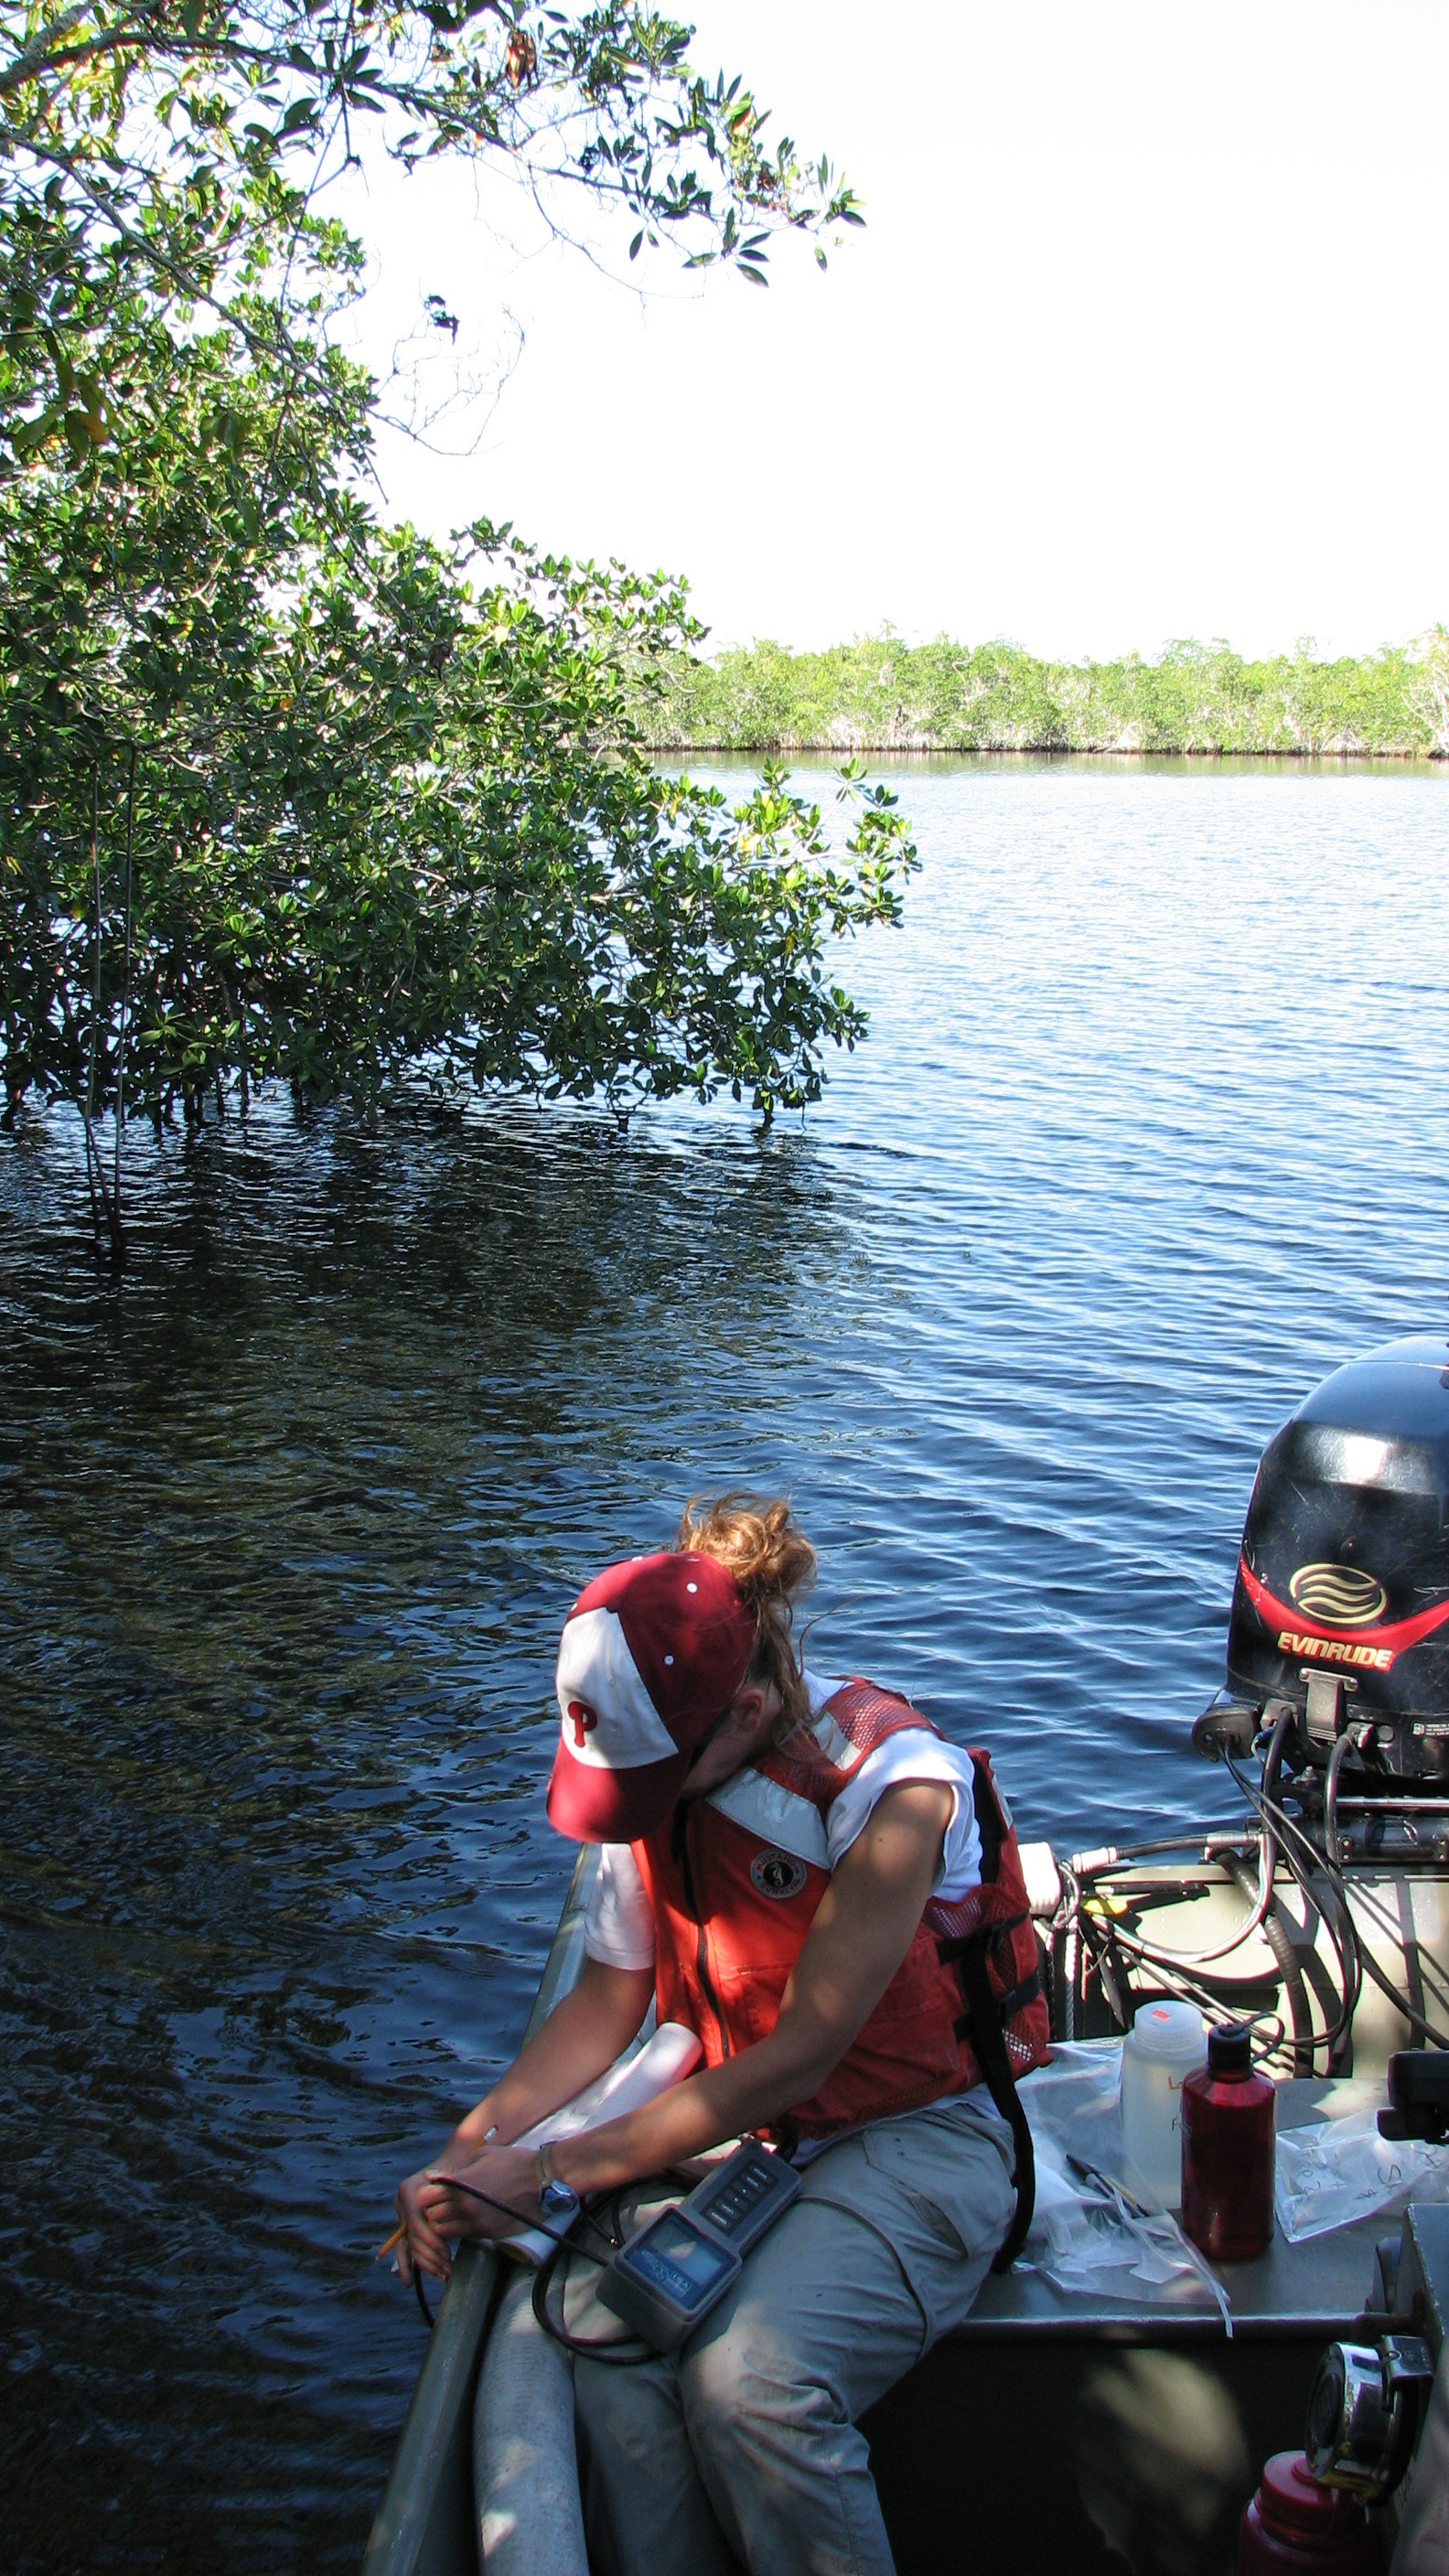 Lauren McCarthy taking YSI readings in Shark River